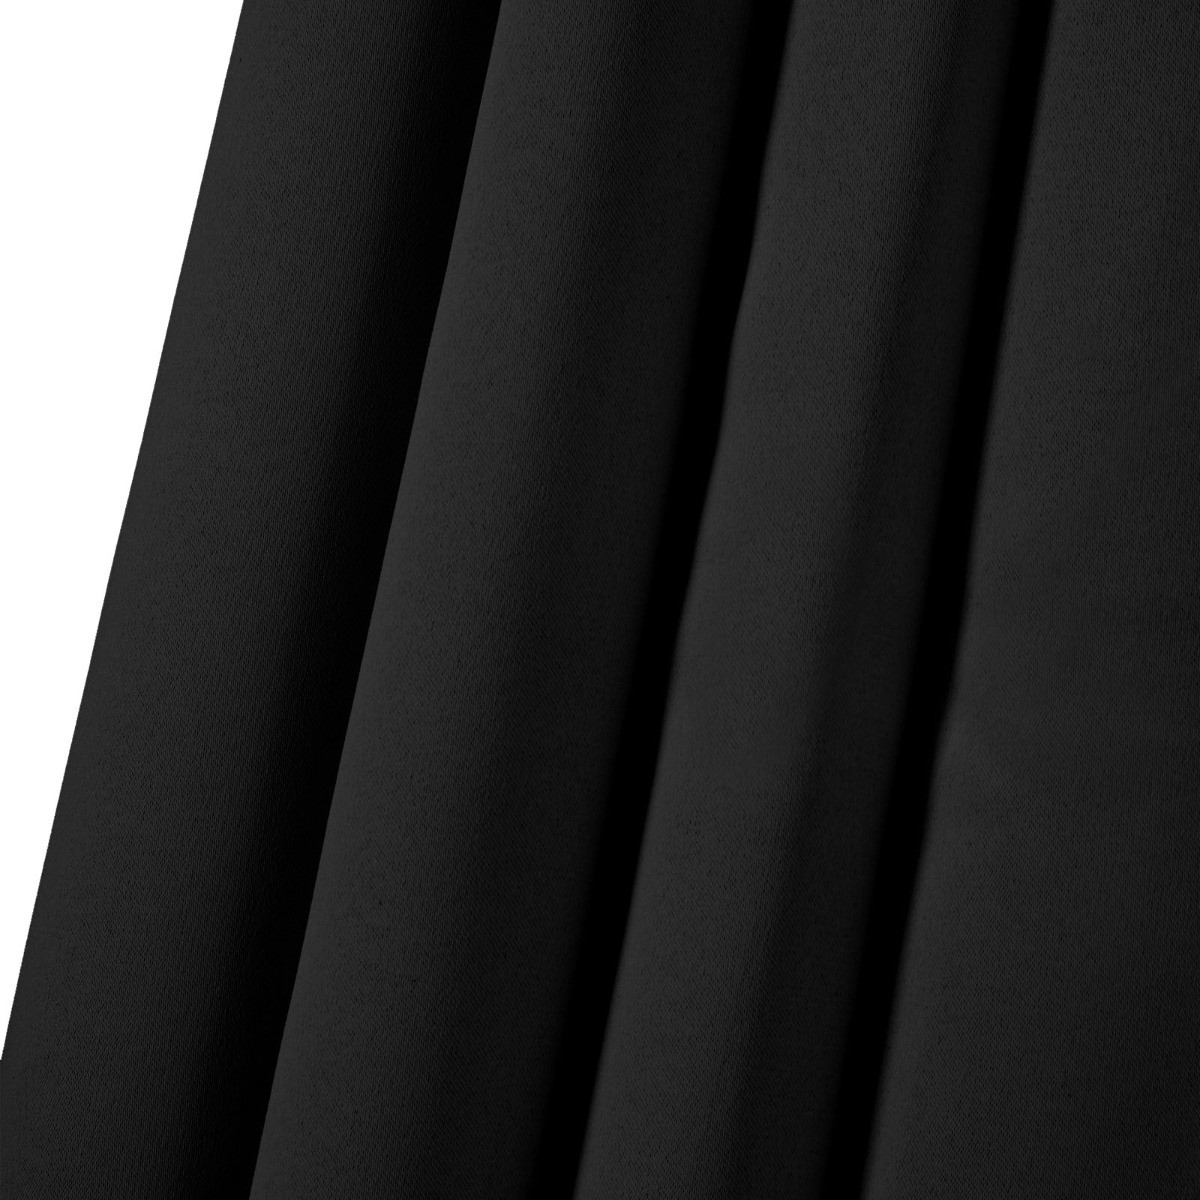 Dreamscene Pencil Pleat Thermal Blackout Curtains - Black, 90" x 54">